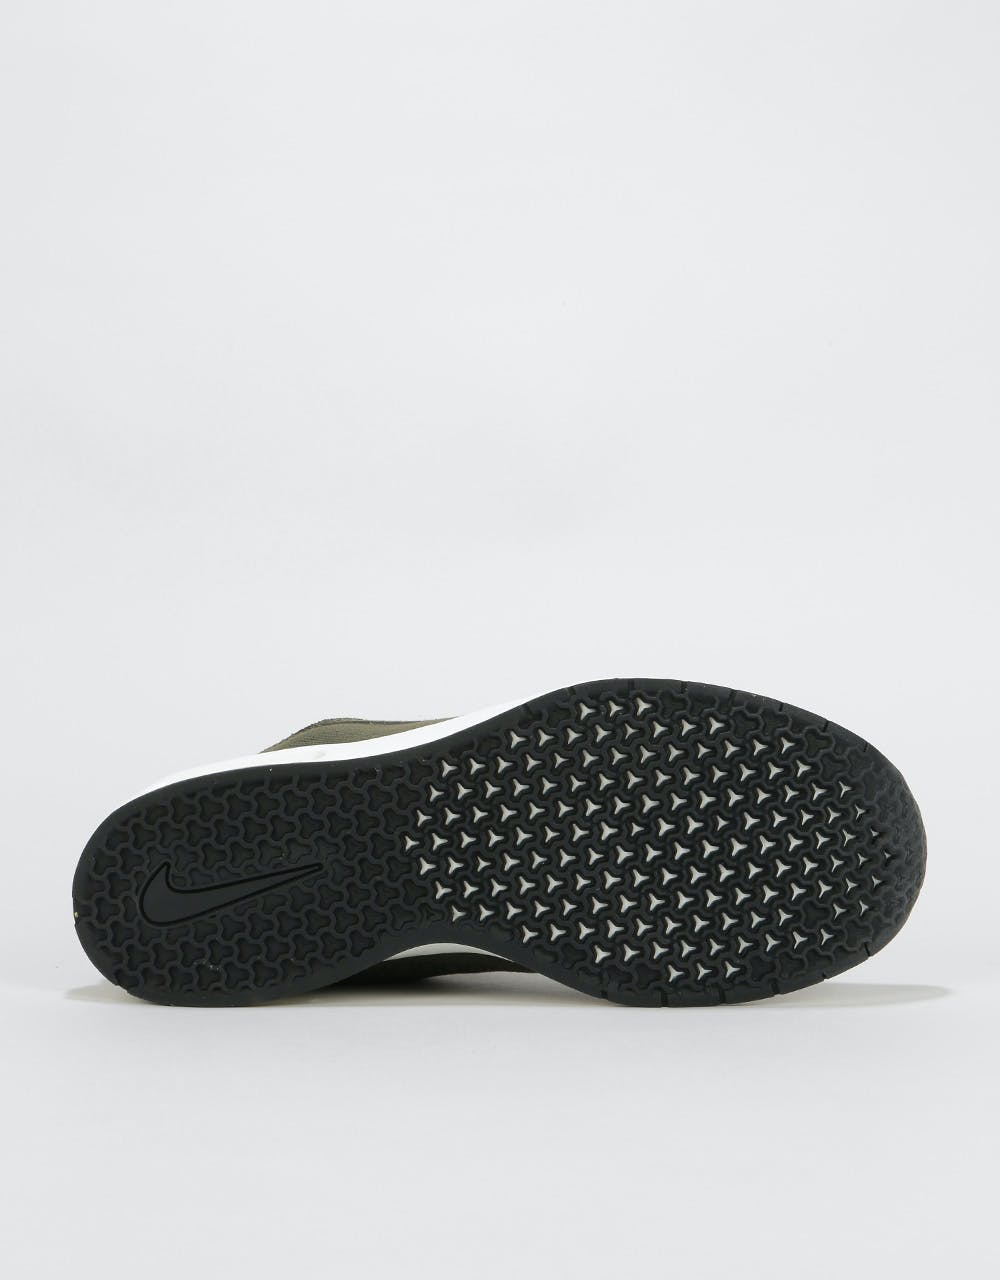 Nike SB Air Max Janoski 2 Premium Shoes - Iguana/Black-Cargo Khaki